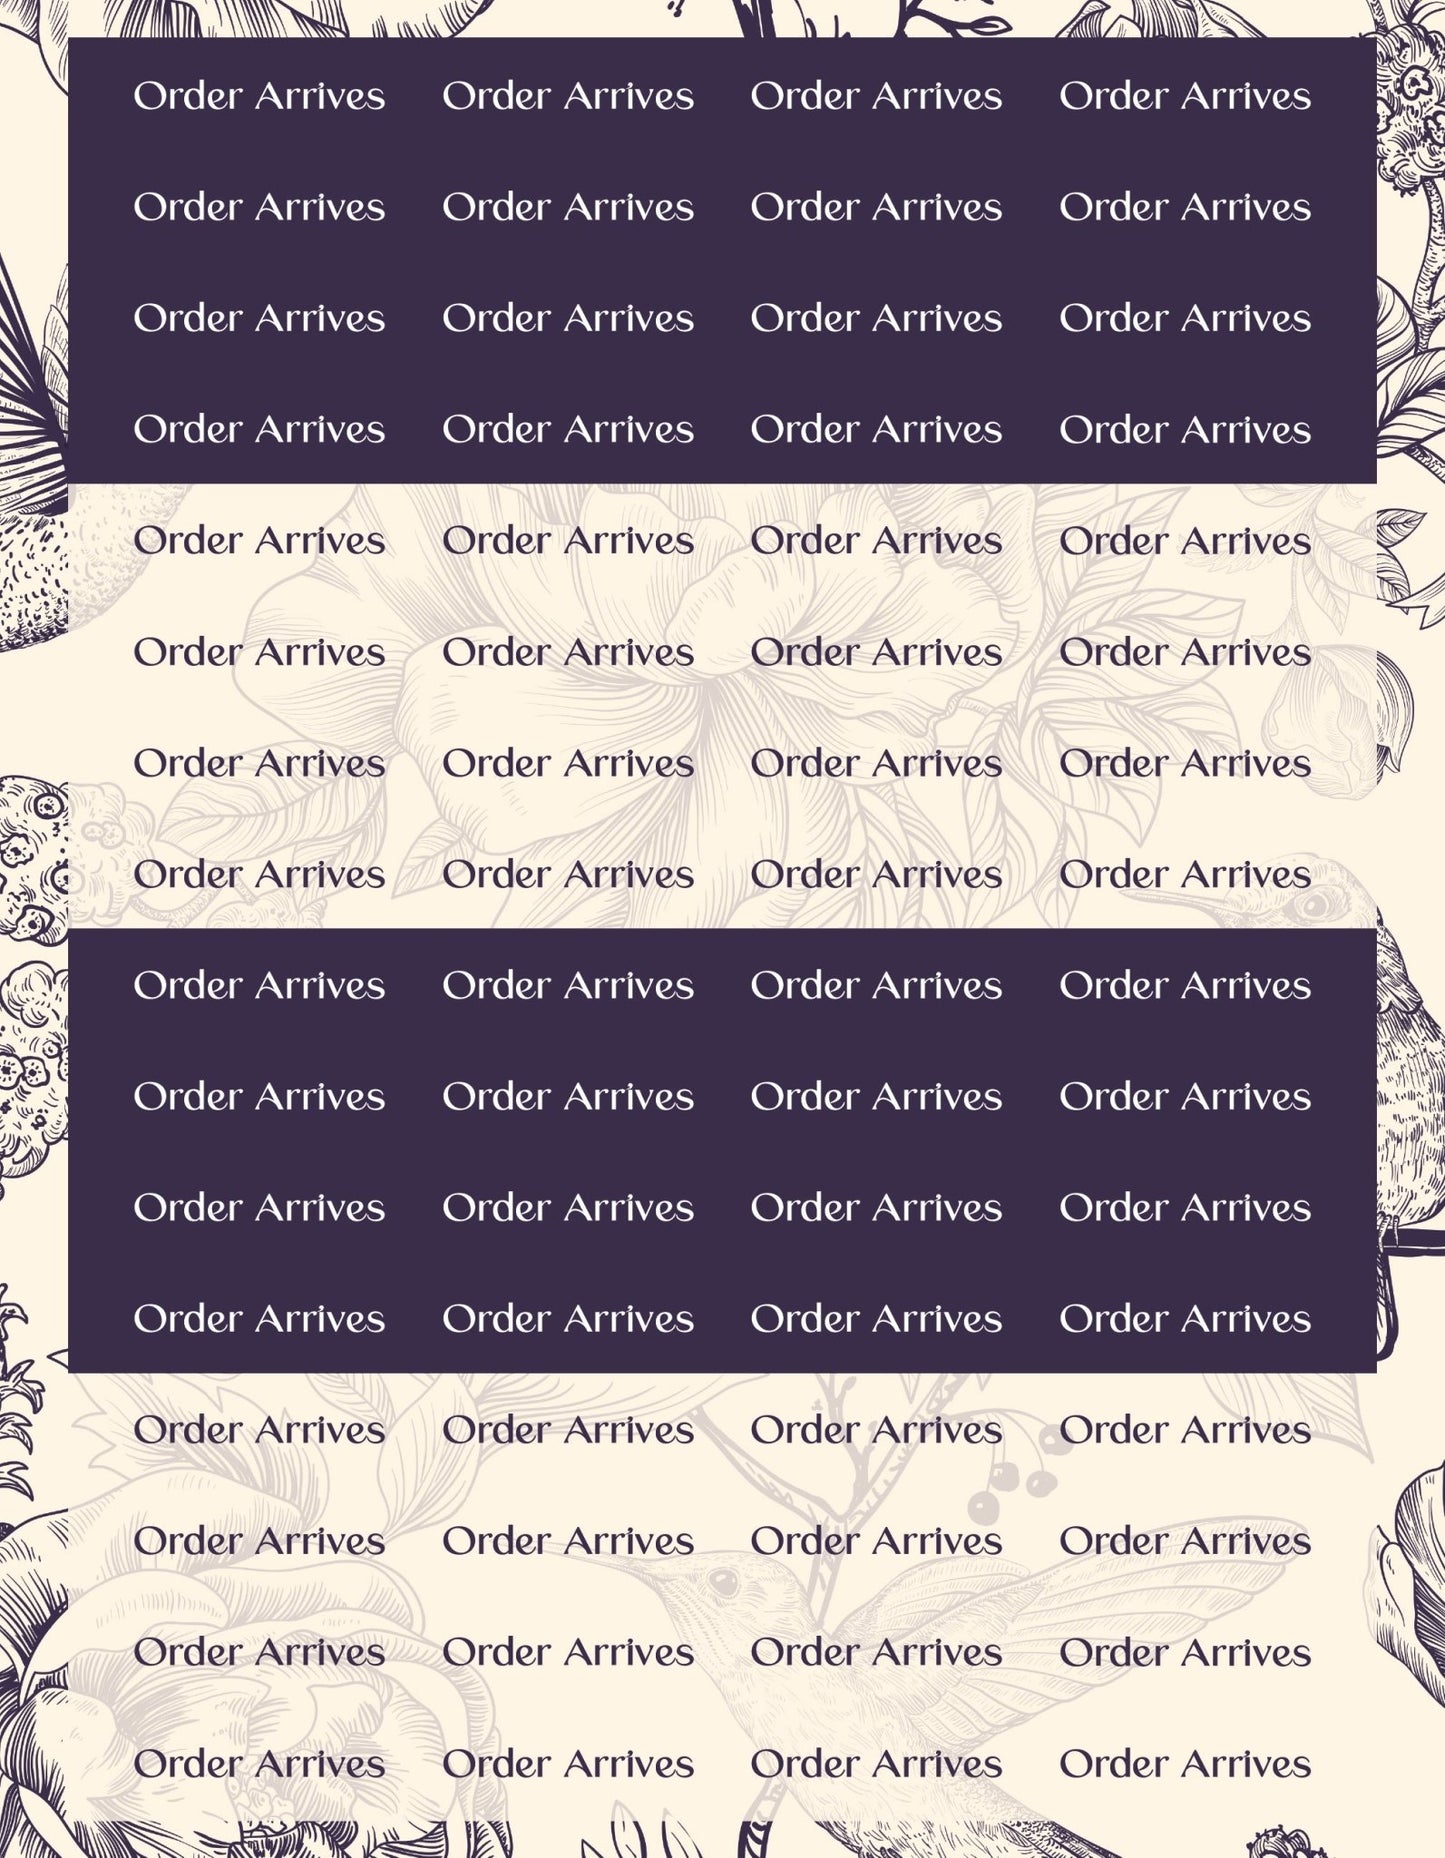 Order Arrives Sticker Sheets - 9 Designs/Colors - Colibri Paper Co